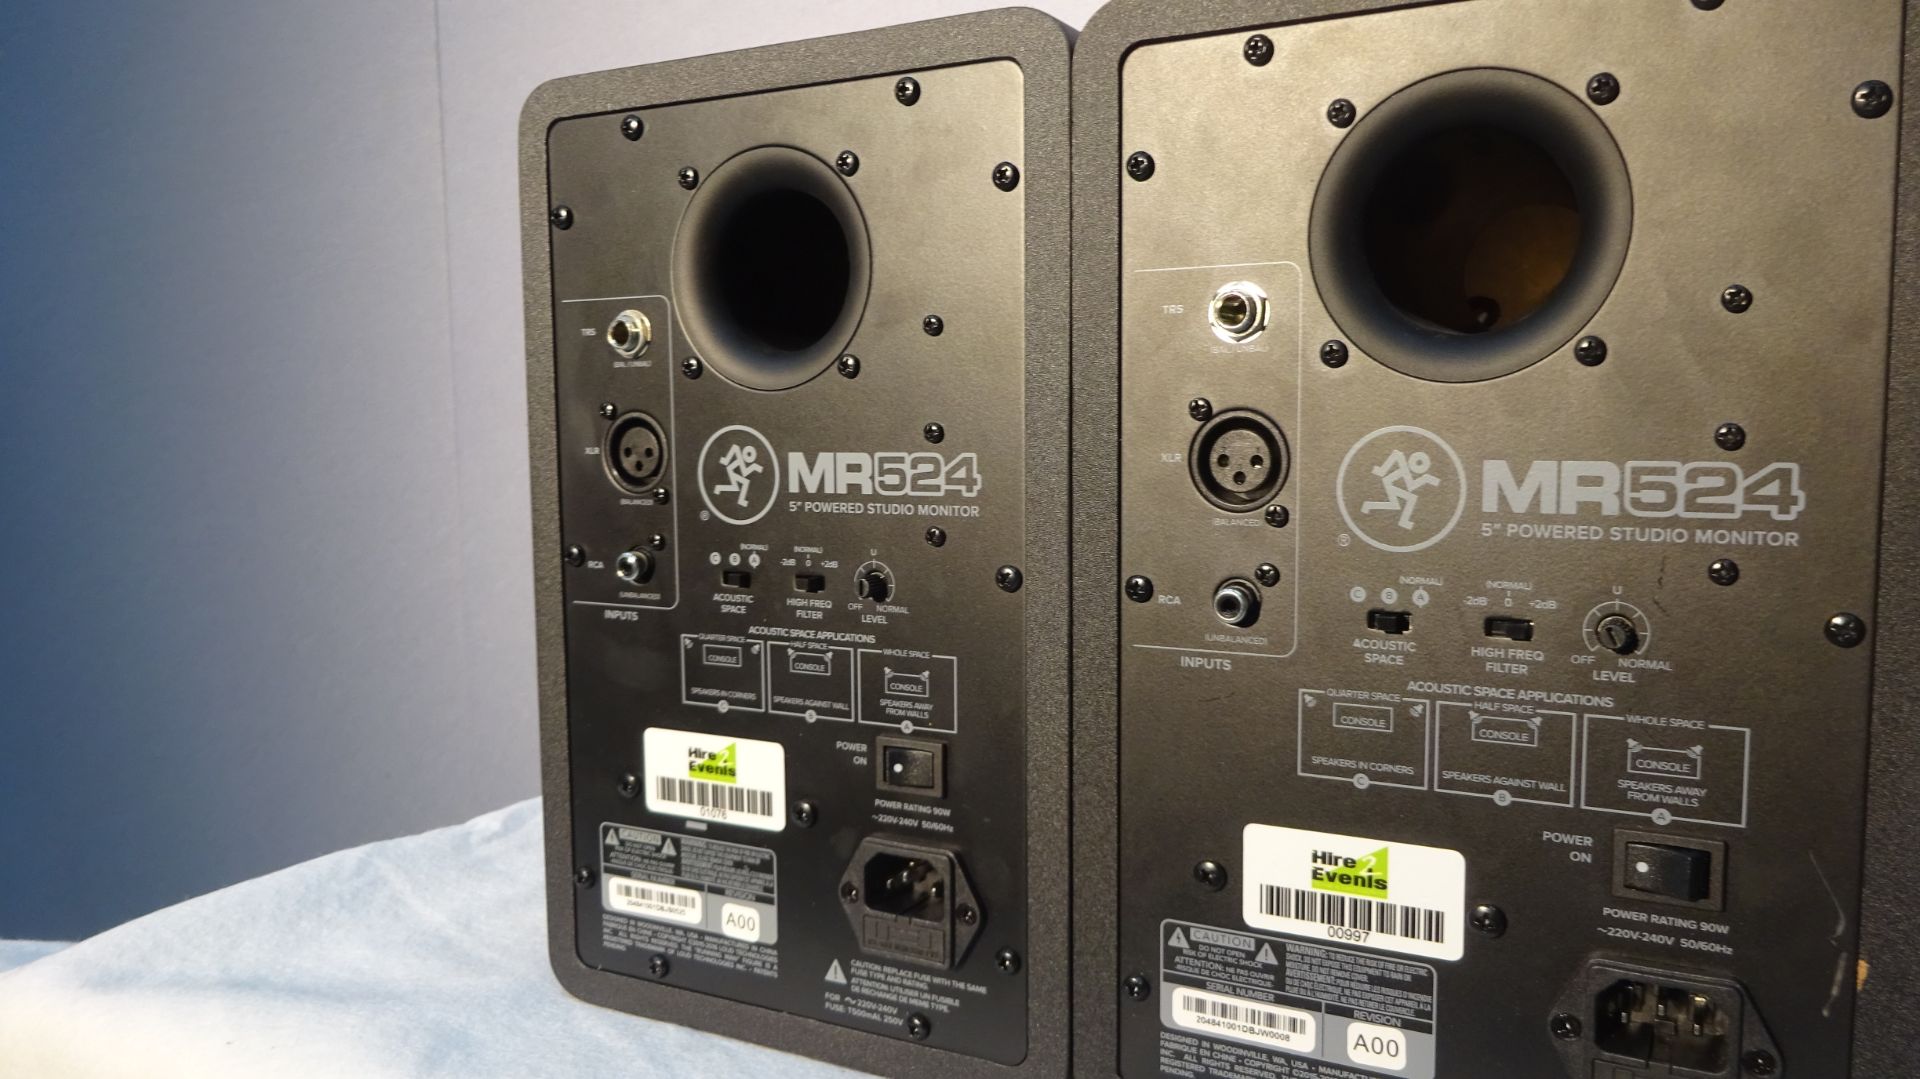 2 x MR524 Powered Studio Monitor Speaker c/w 2 Flights Cases VERY LITTLE USE - Image 5 of 11